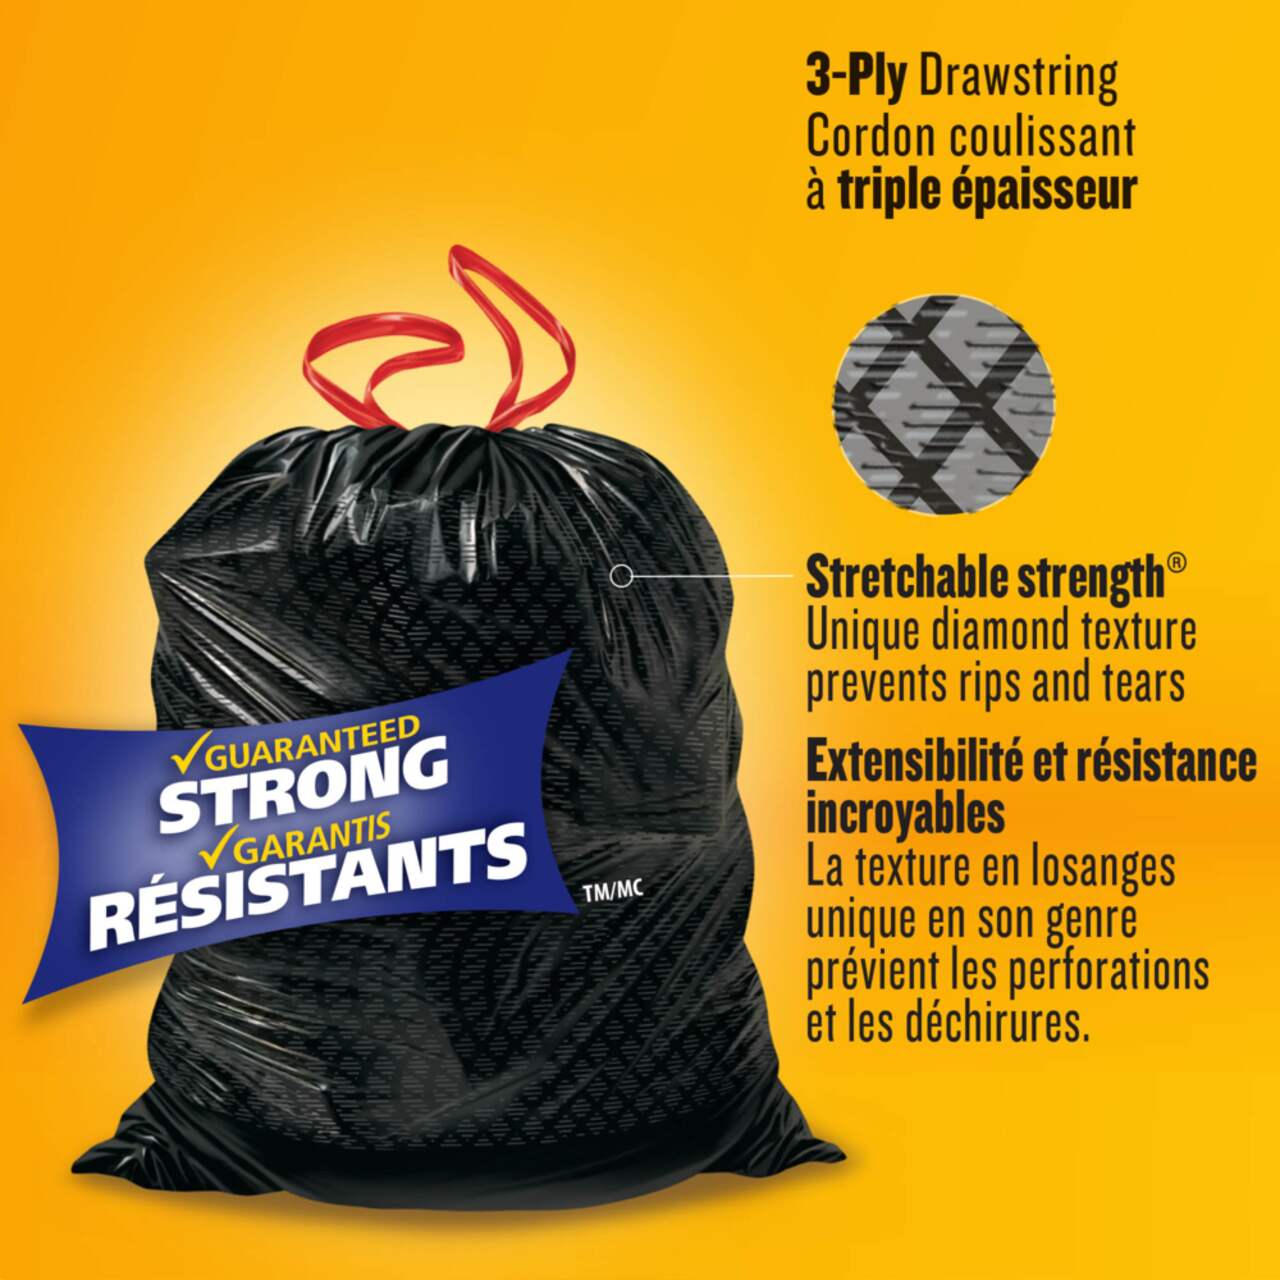 Sac poubelle avec cordon de serrage, 60 l, LDPE noir, rouleau de 10 sa –  Swiss Neo Trading GmbH